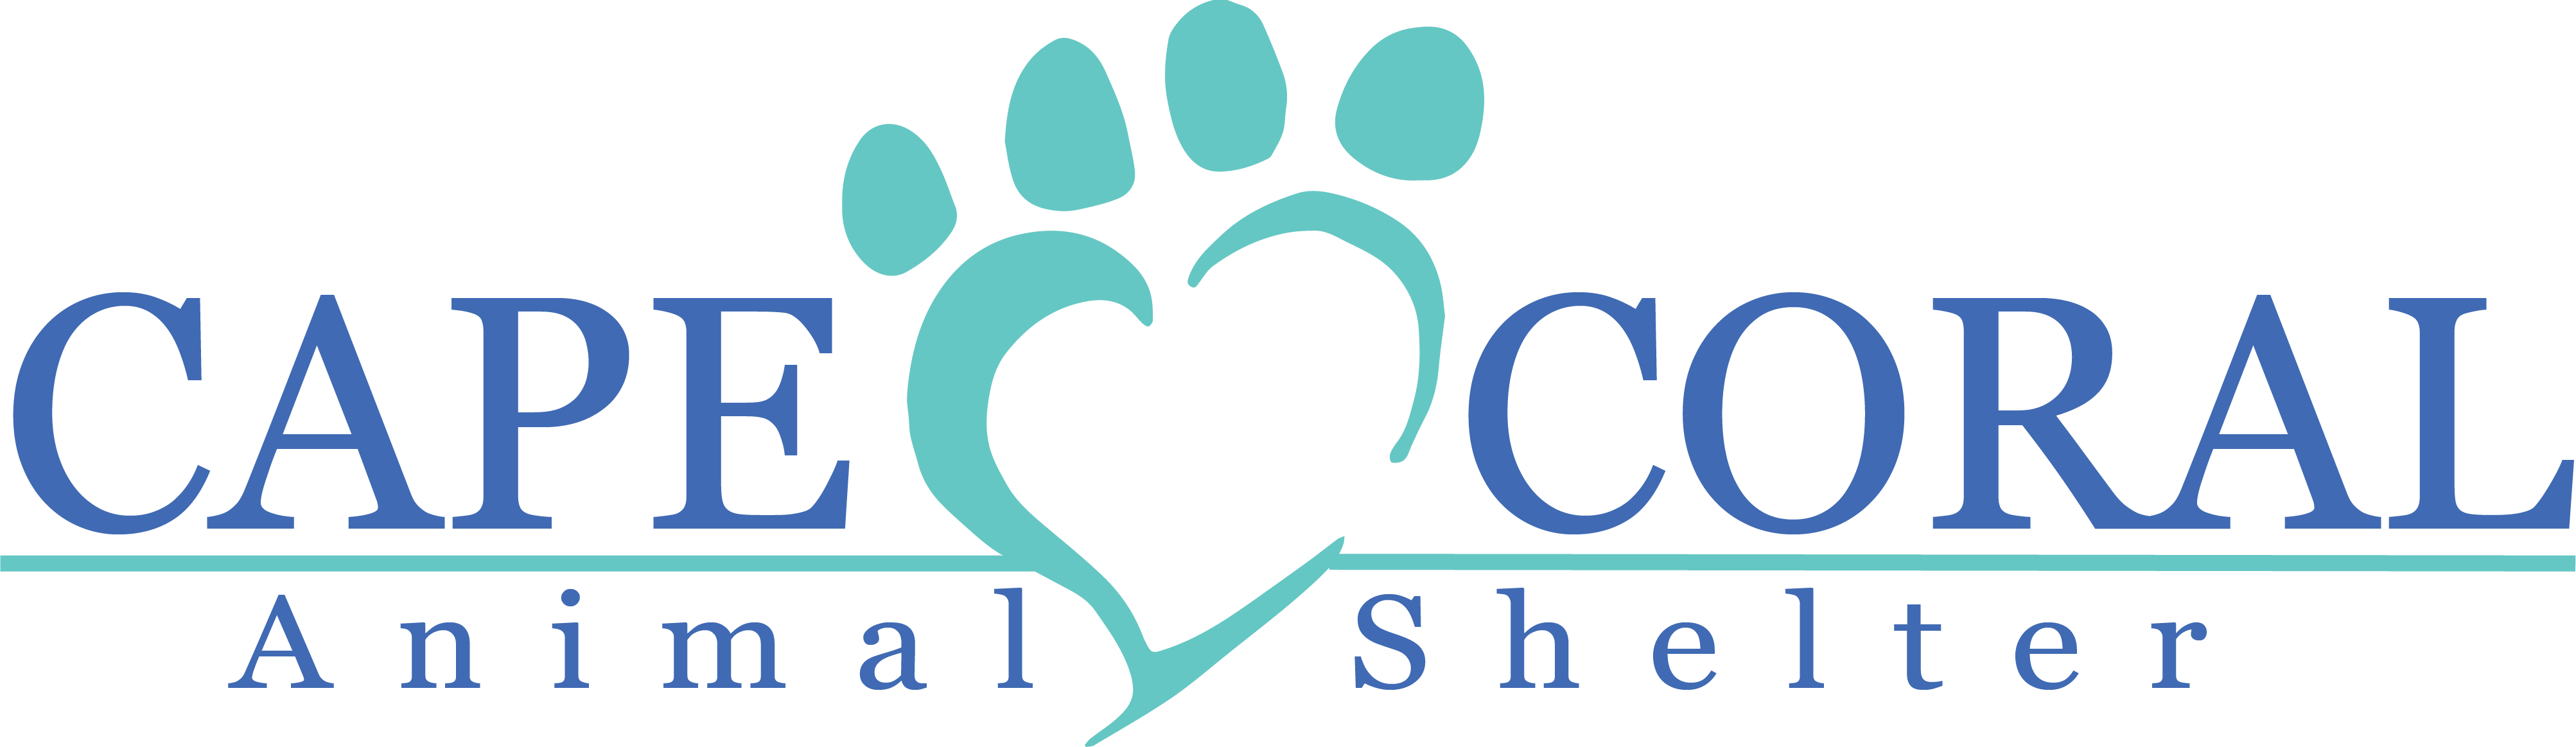 cape coral animal shelter logo